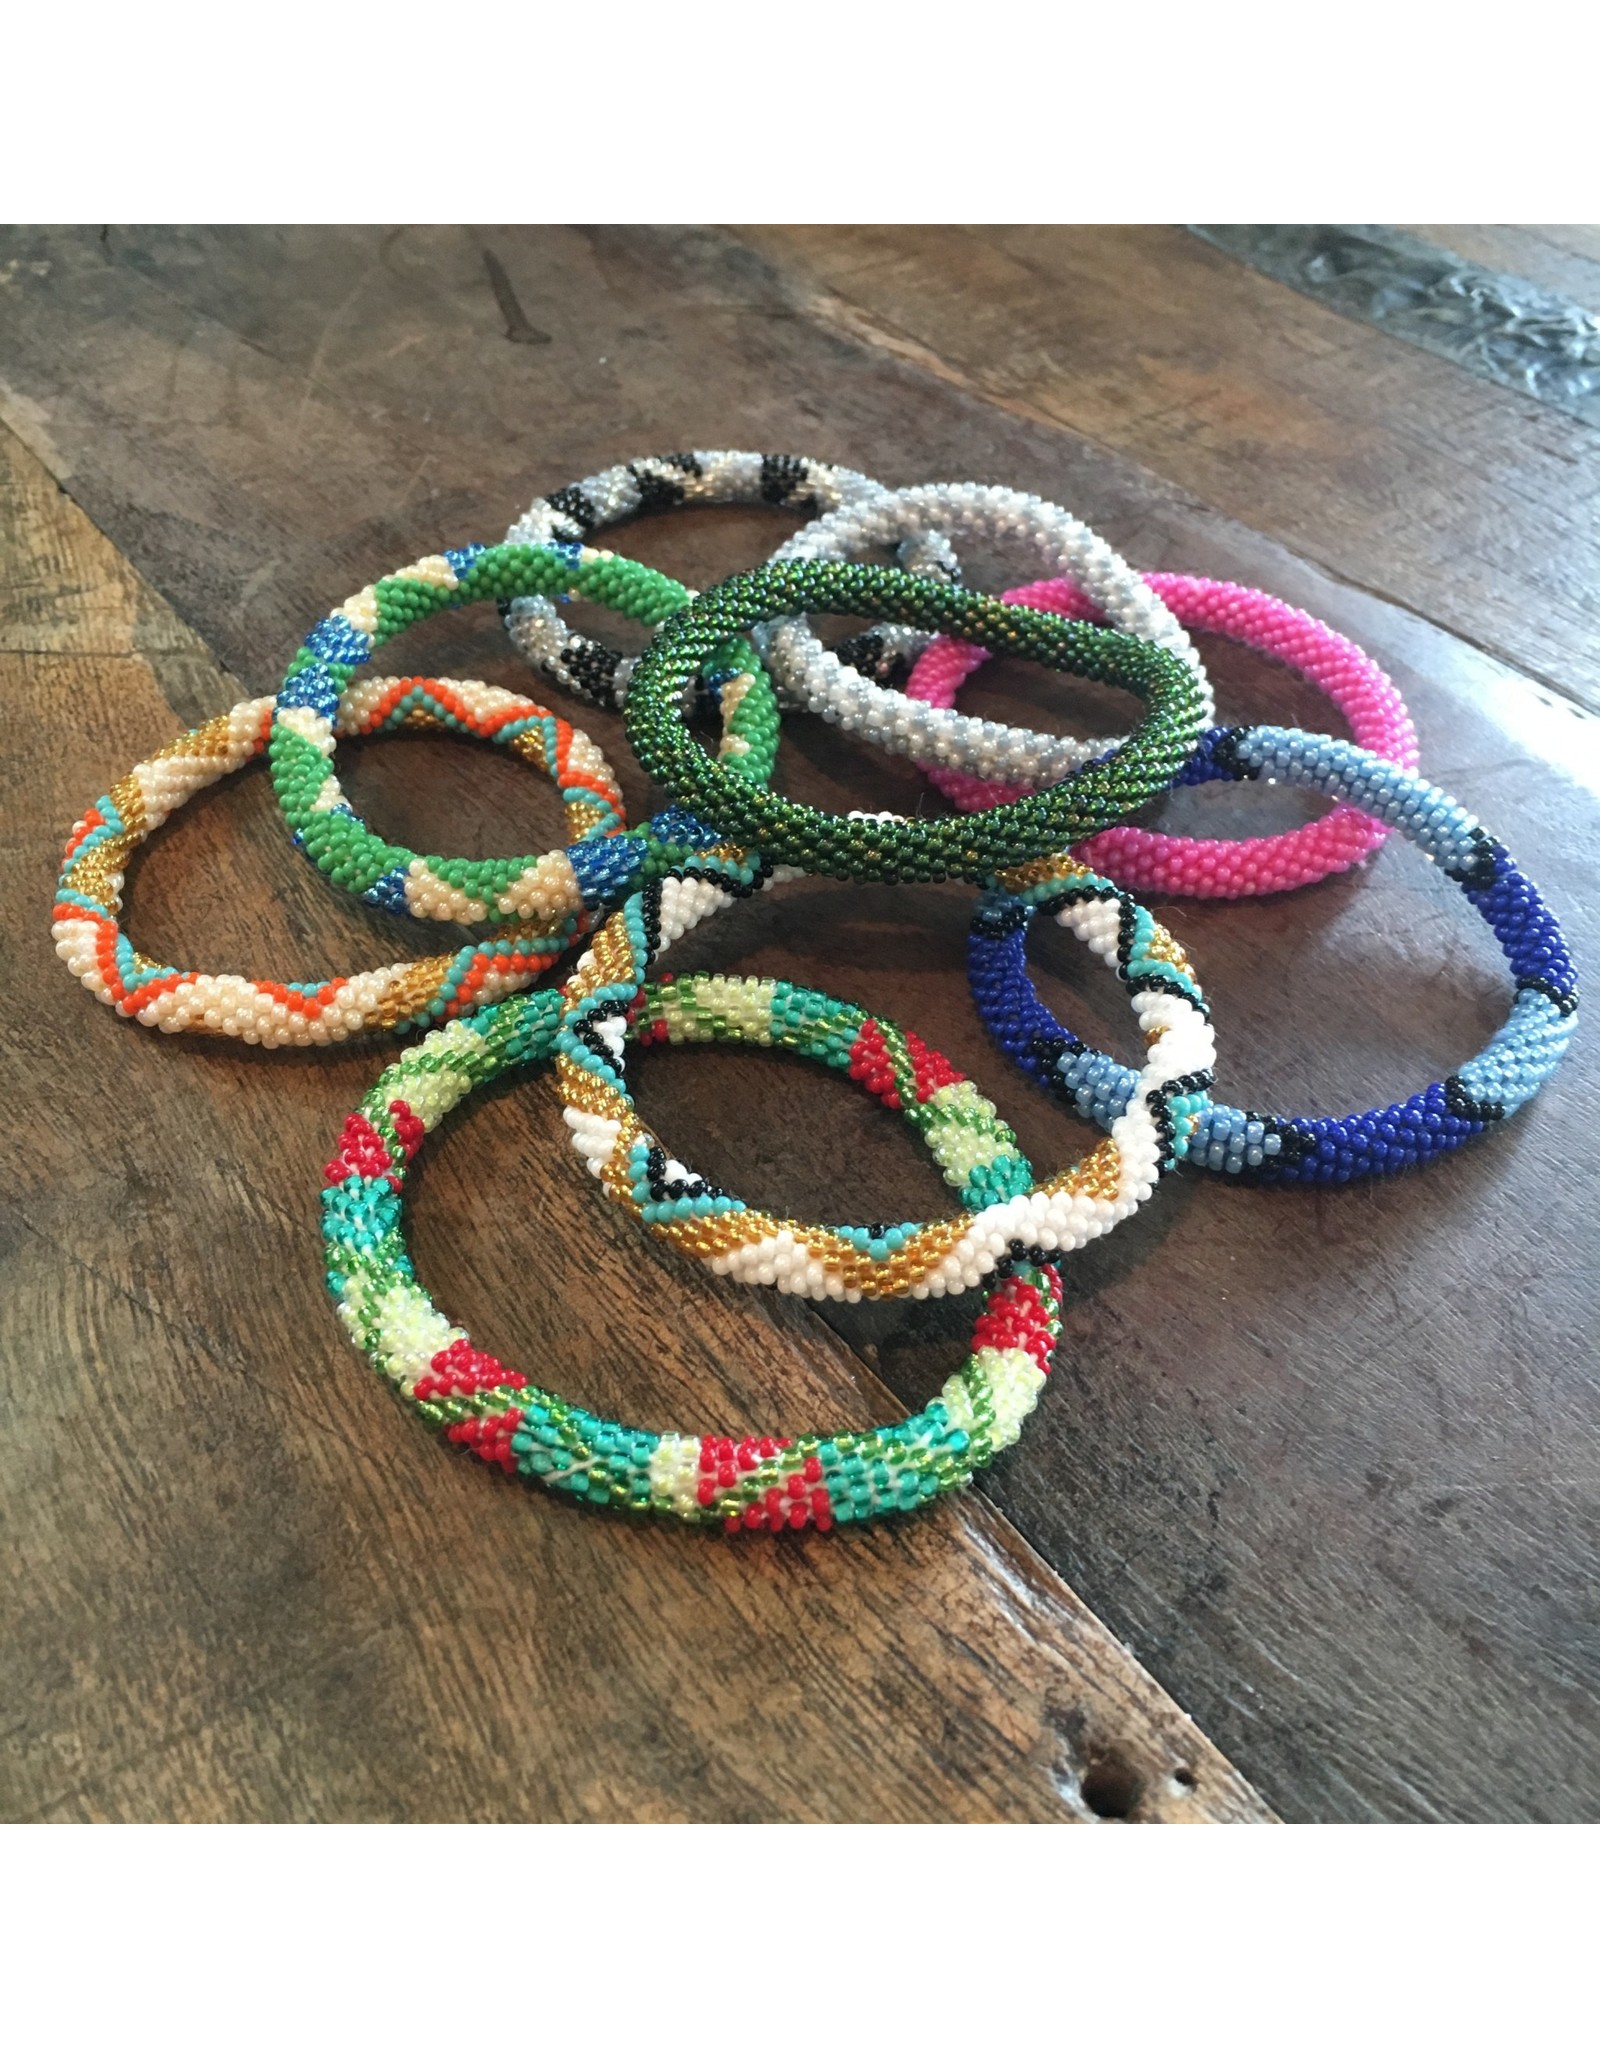 Trade roots Beaded Roll-On Bracelets, Nepal